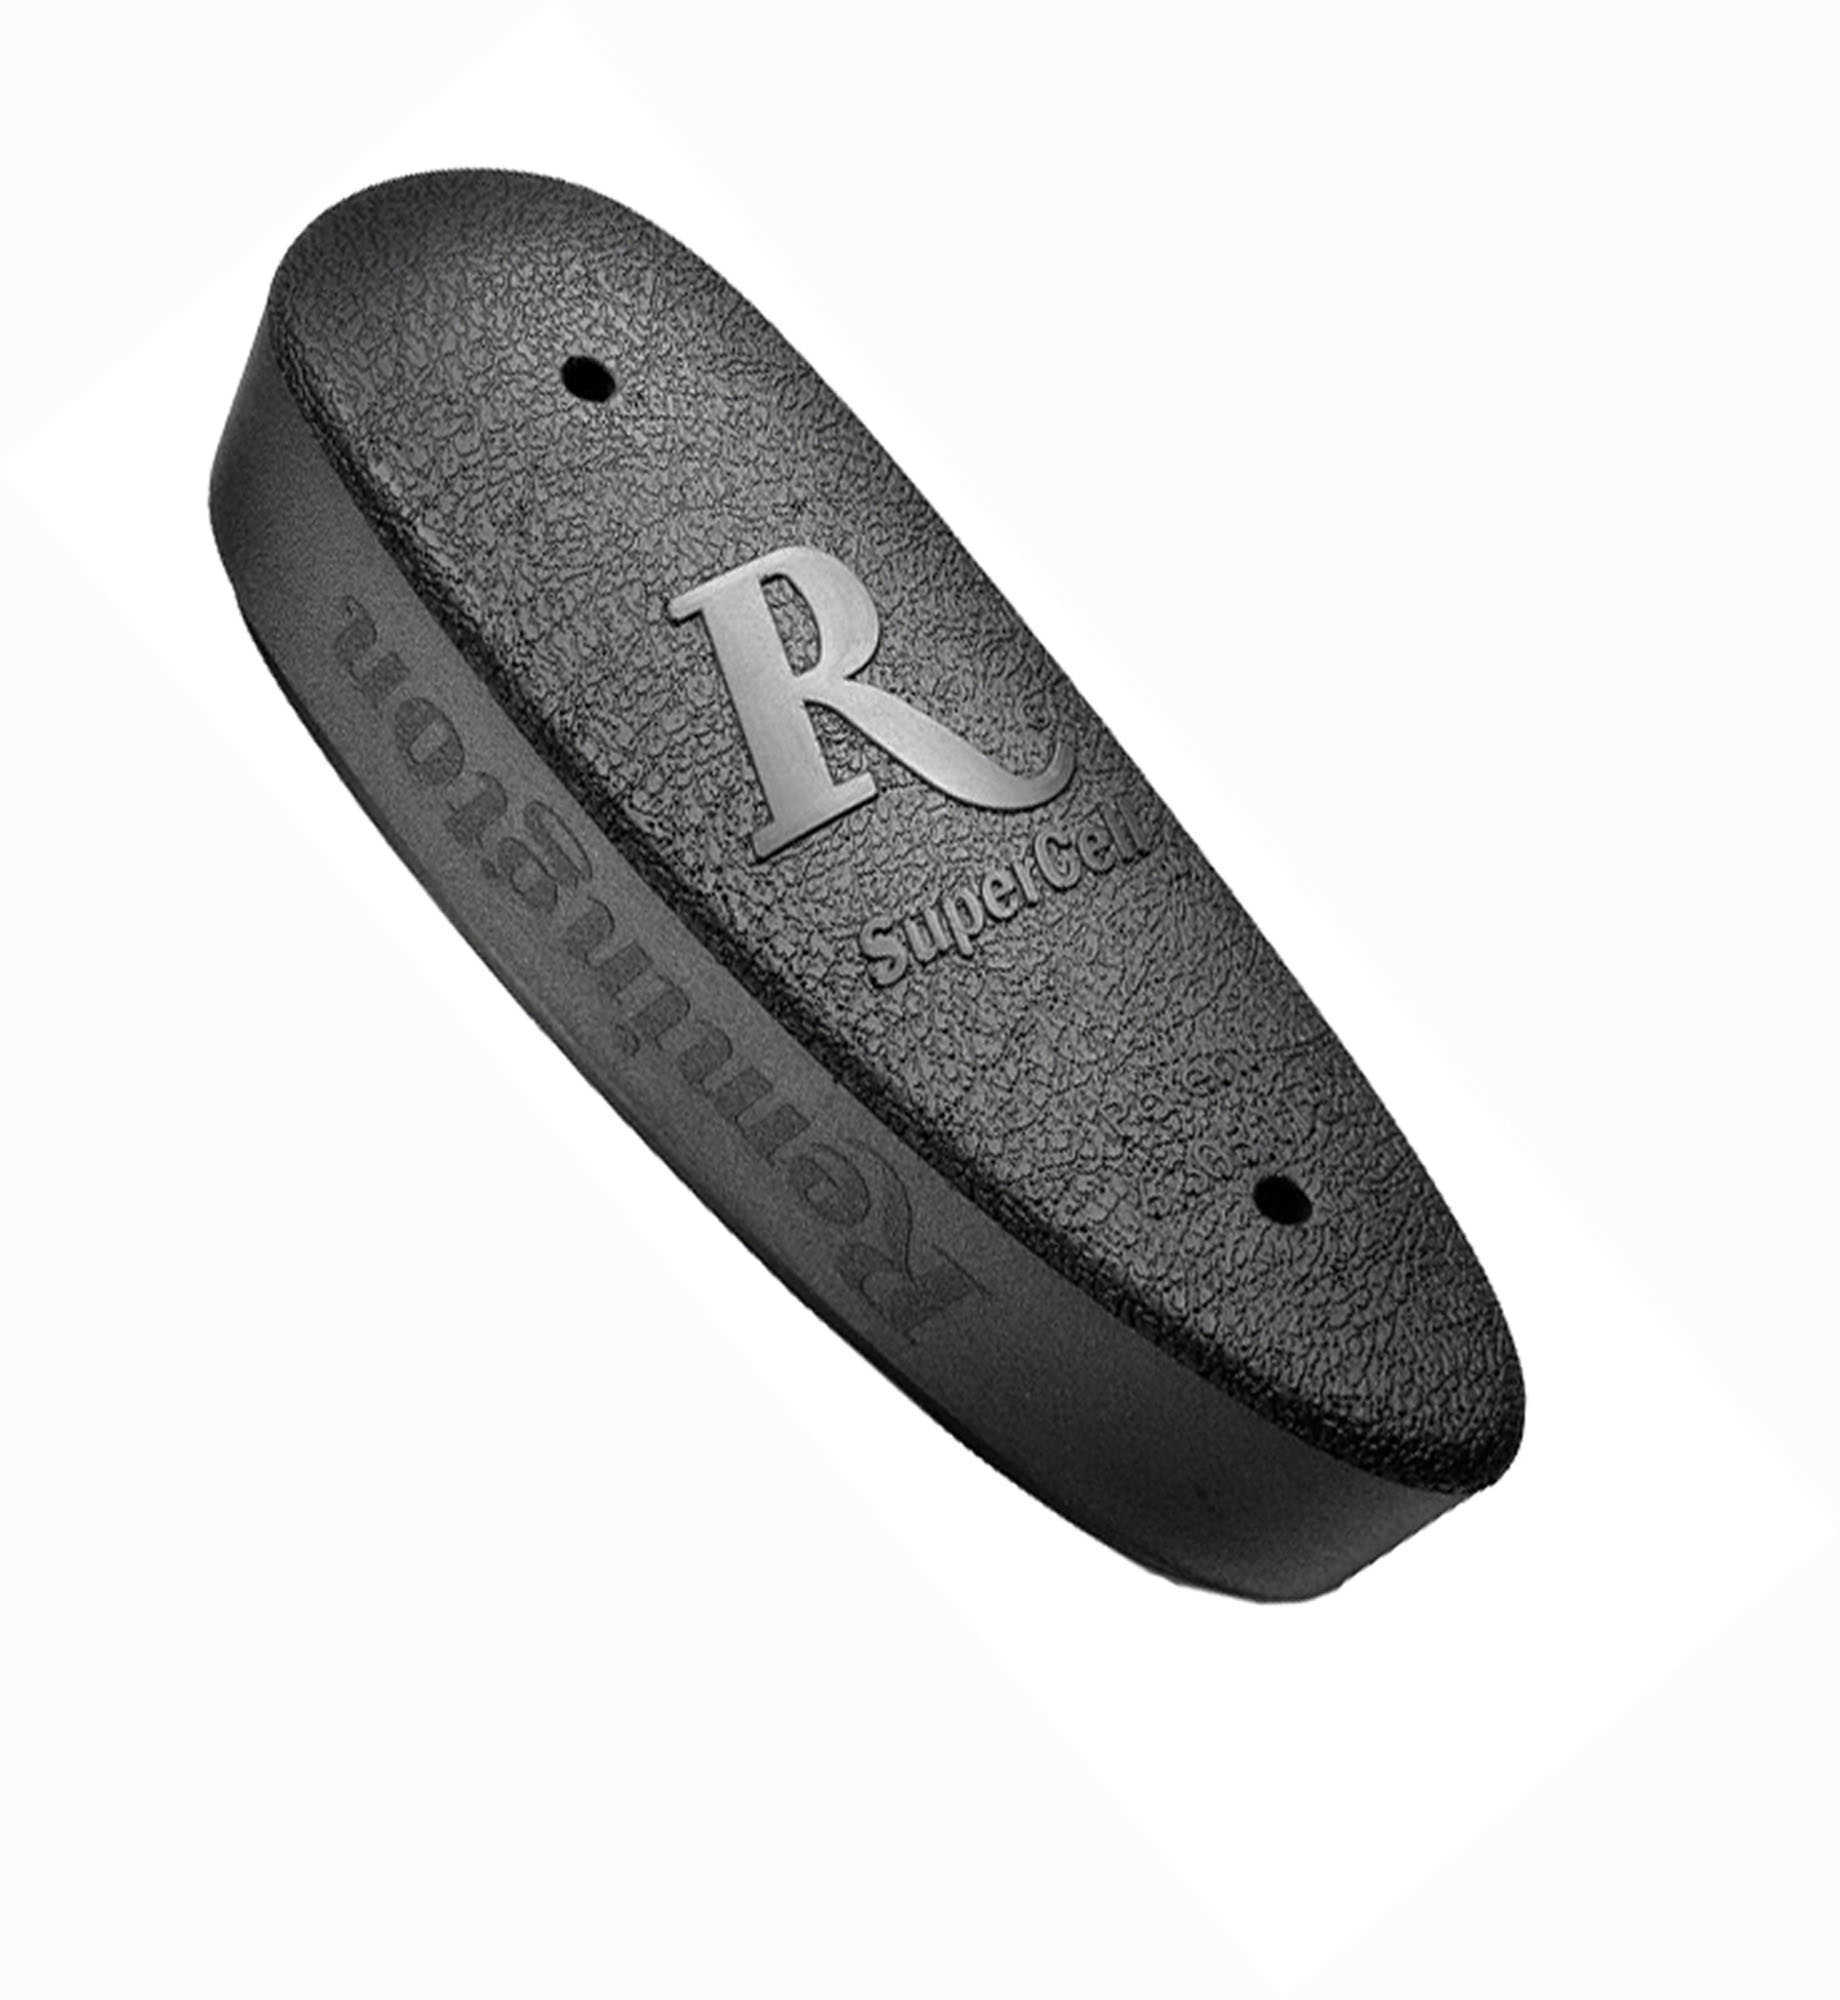 Remington Supercell Recoil Pad For Wood Shotgun Black